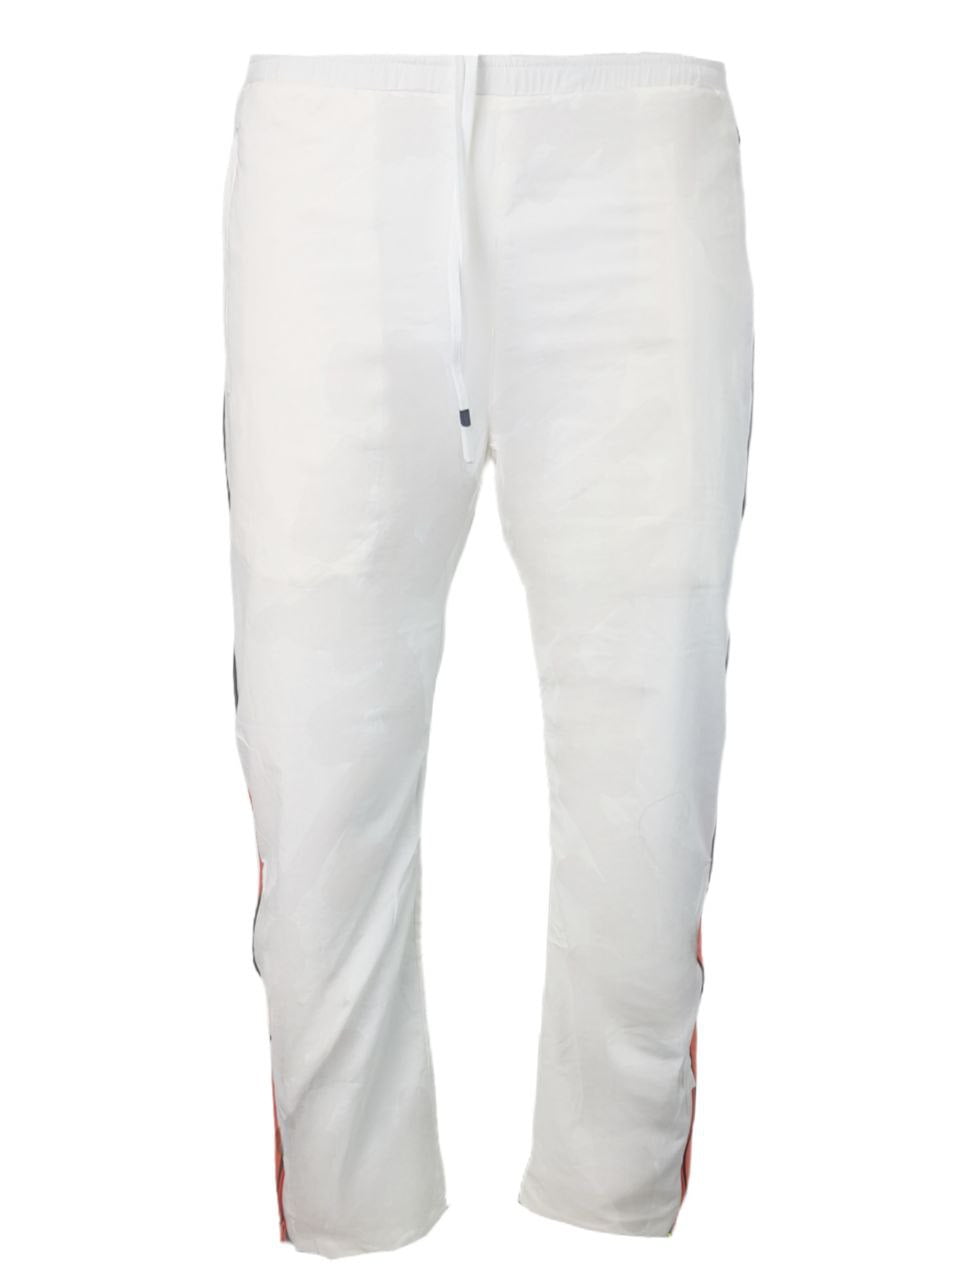 BRANDBLACK Men's Long Lace Up Activewear Pants, White, Large - Walmart.com